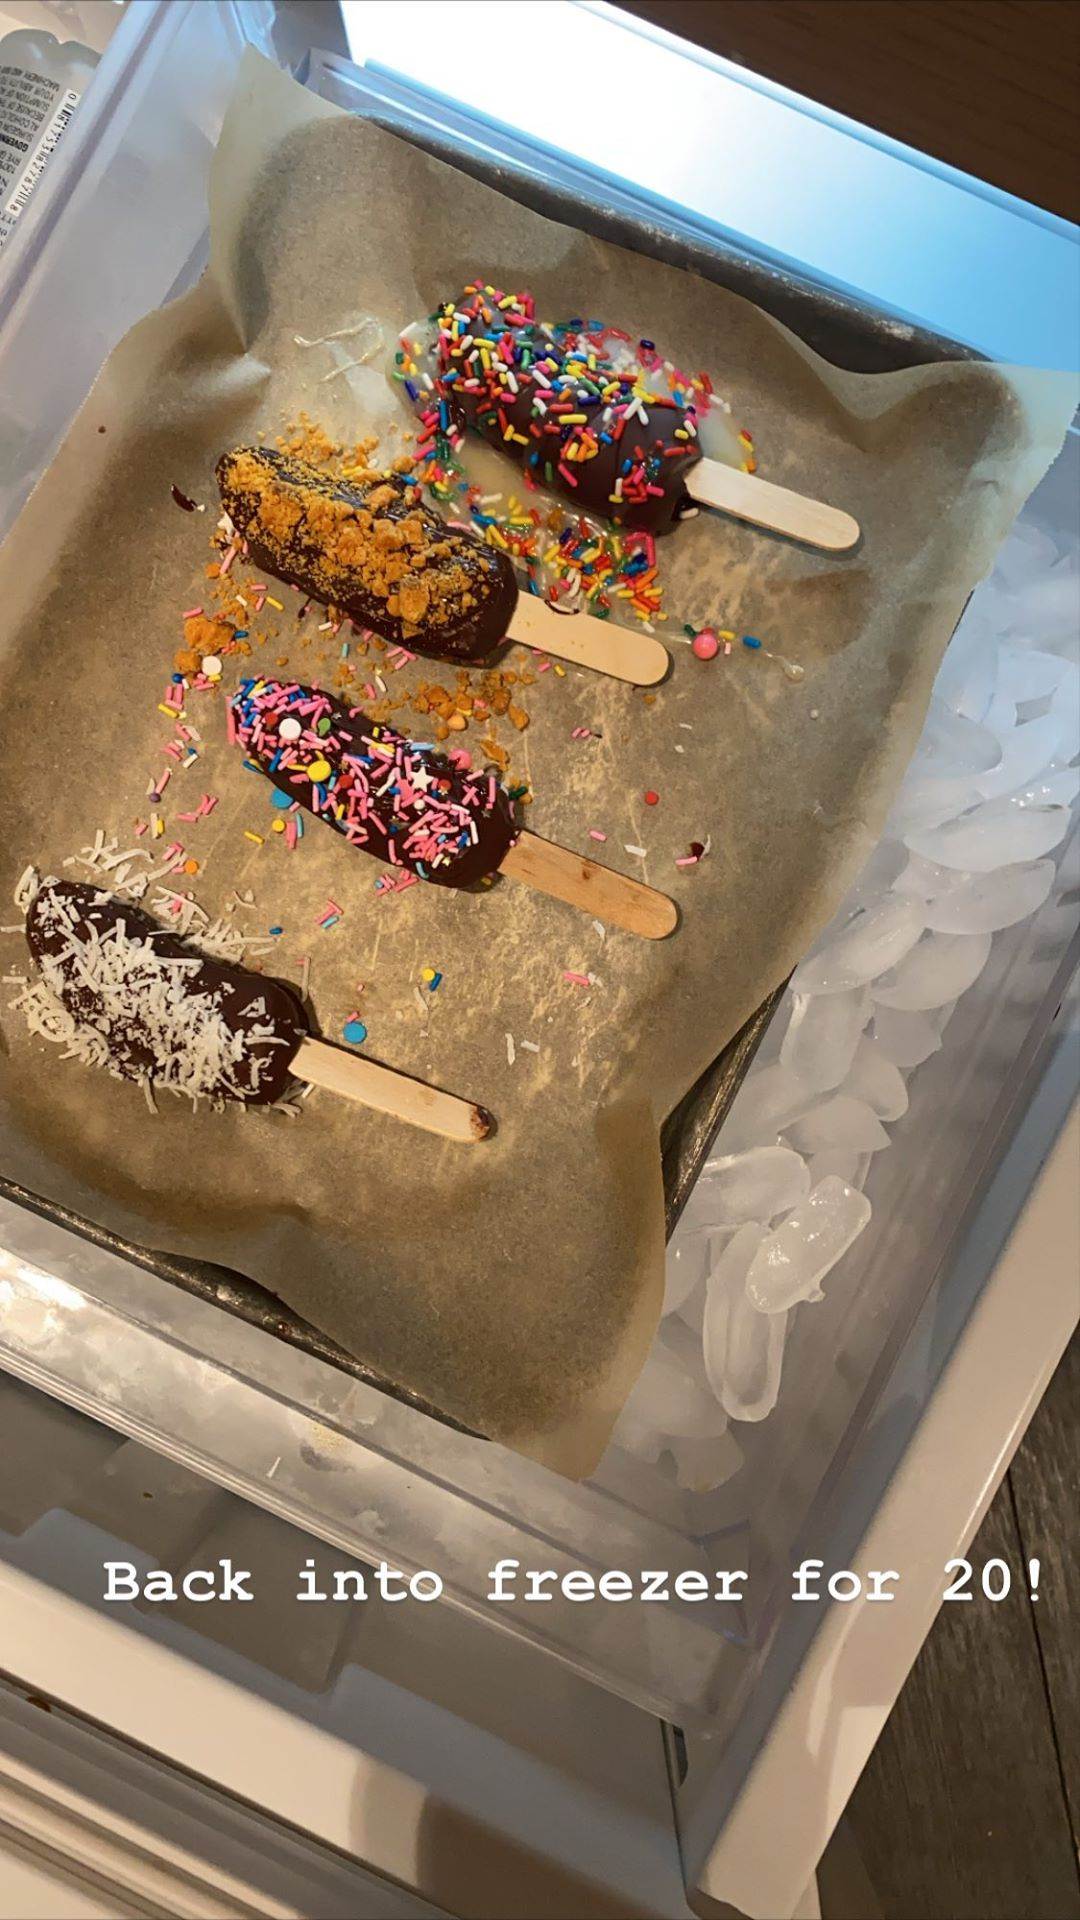 Čokoladne sladoled banane - tri čarobne riječi Chrissy Teigen